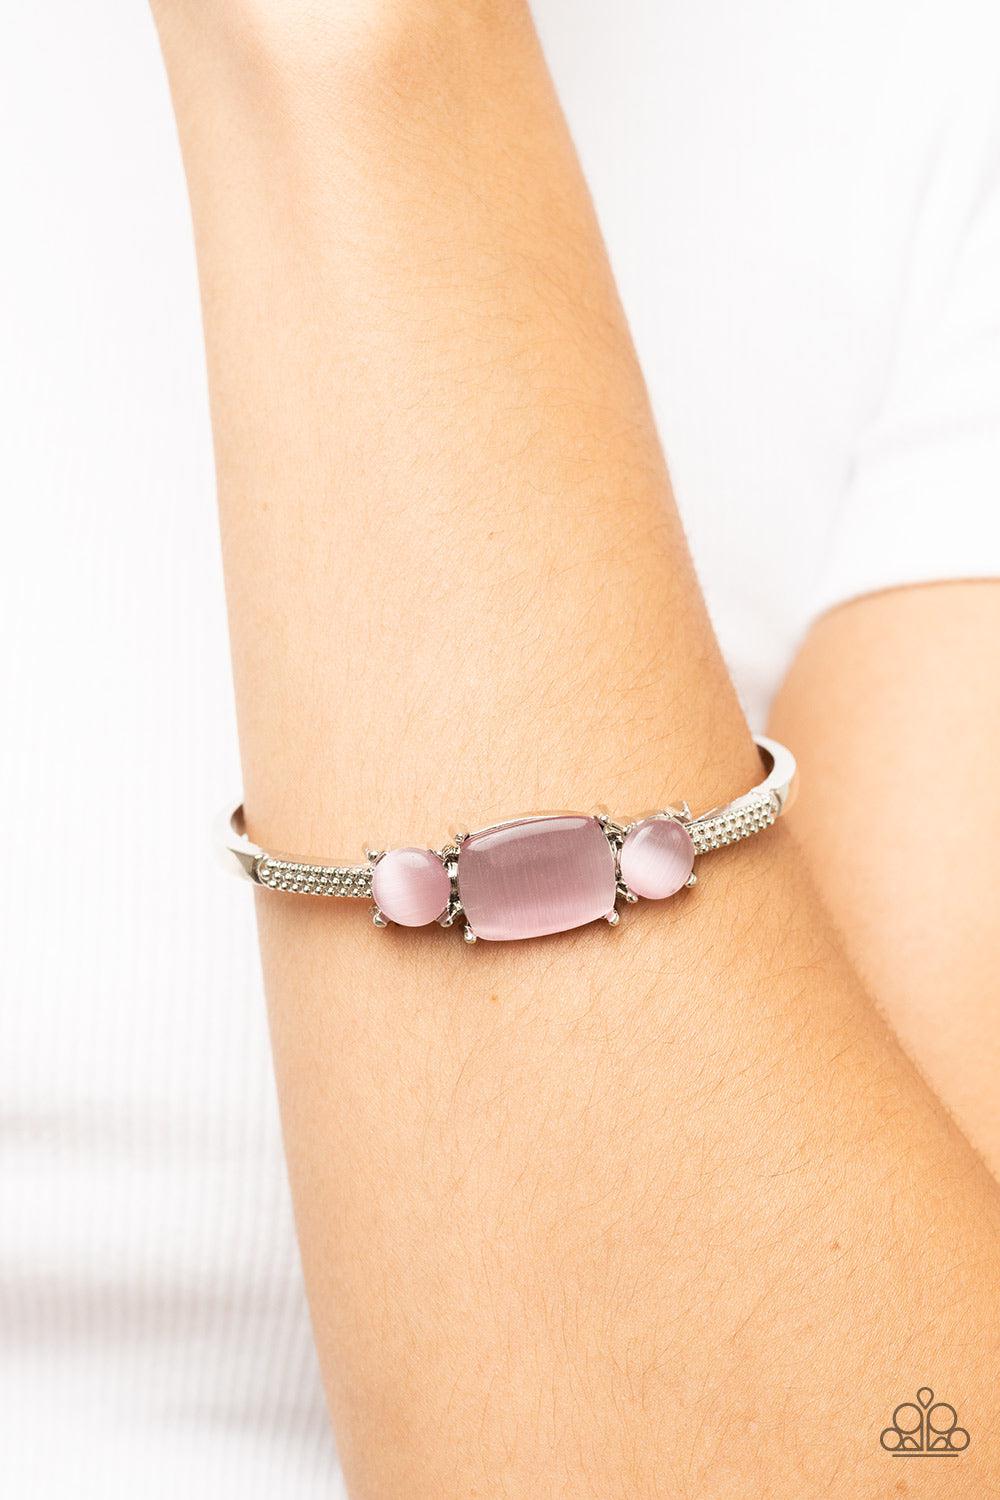 Tranquil Treasure Pink Cat&#39;s Eye Stone Cuff Bracelet - Paparazzi Accessories-on model - CarasShop.com - $5 Jewelry by Cara Jewels